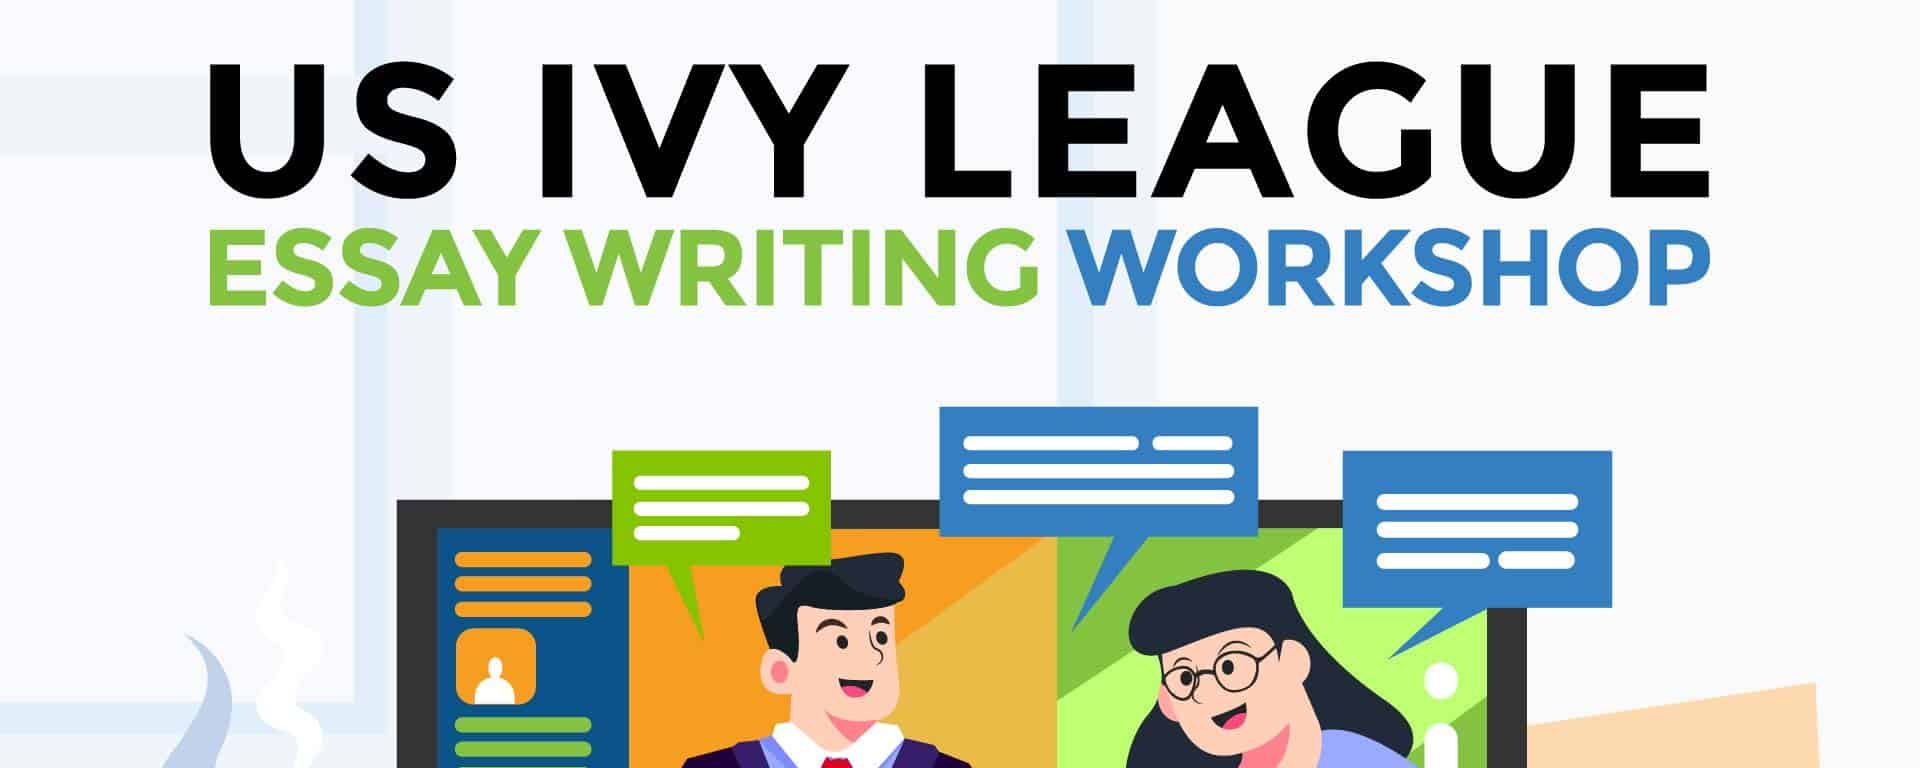 ivy league essay writing